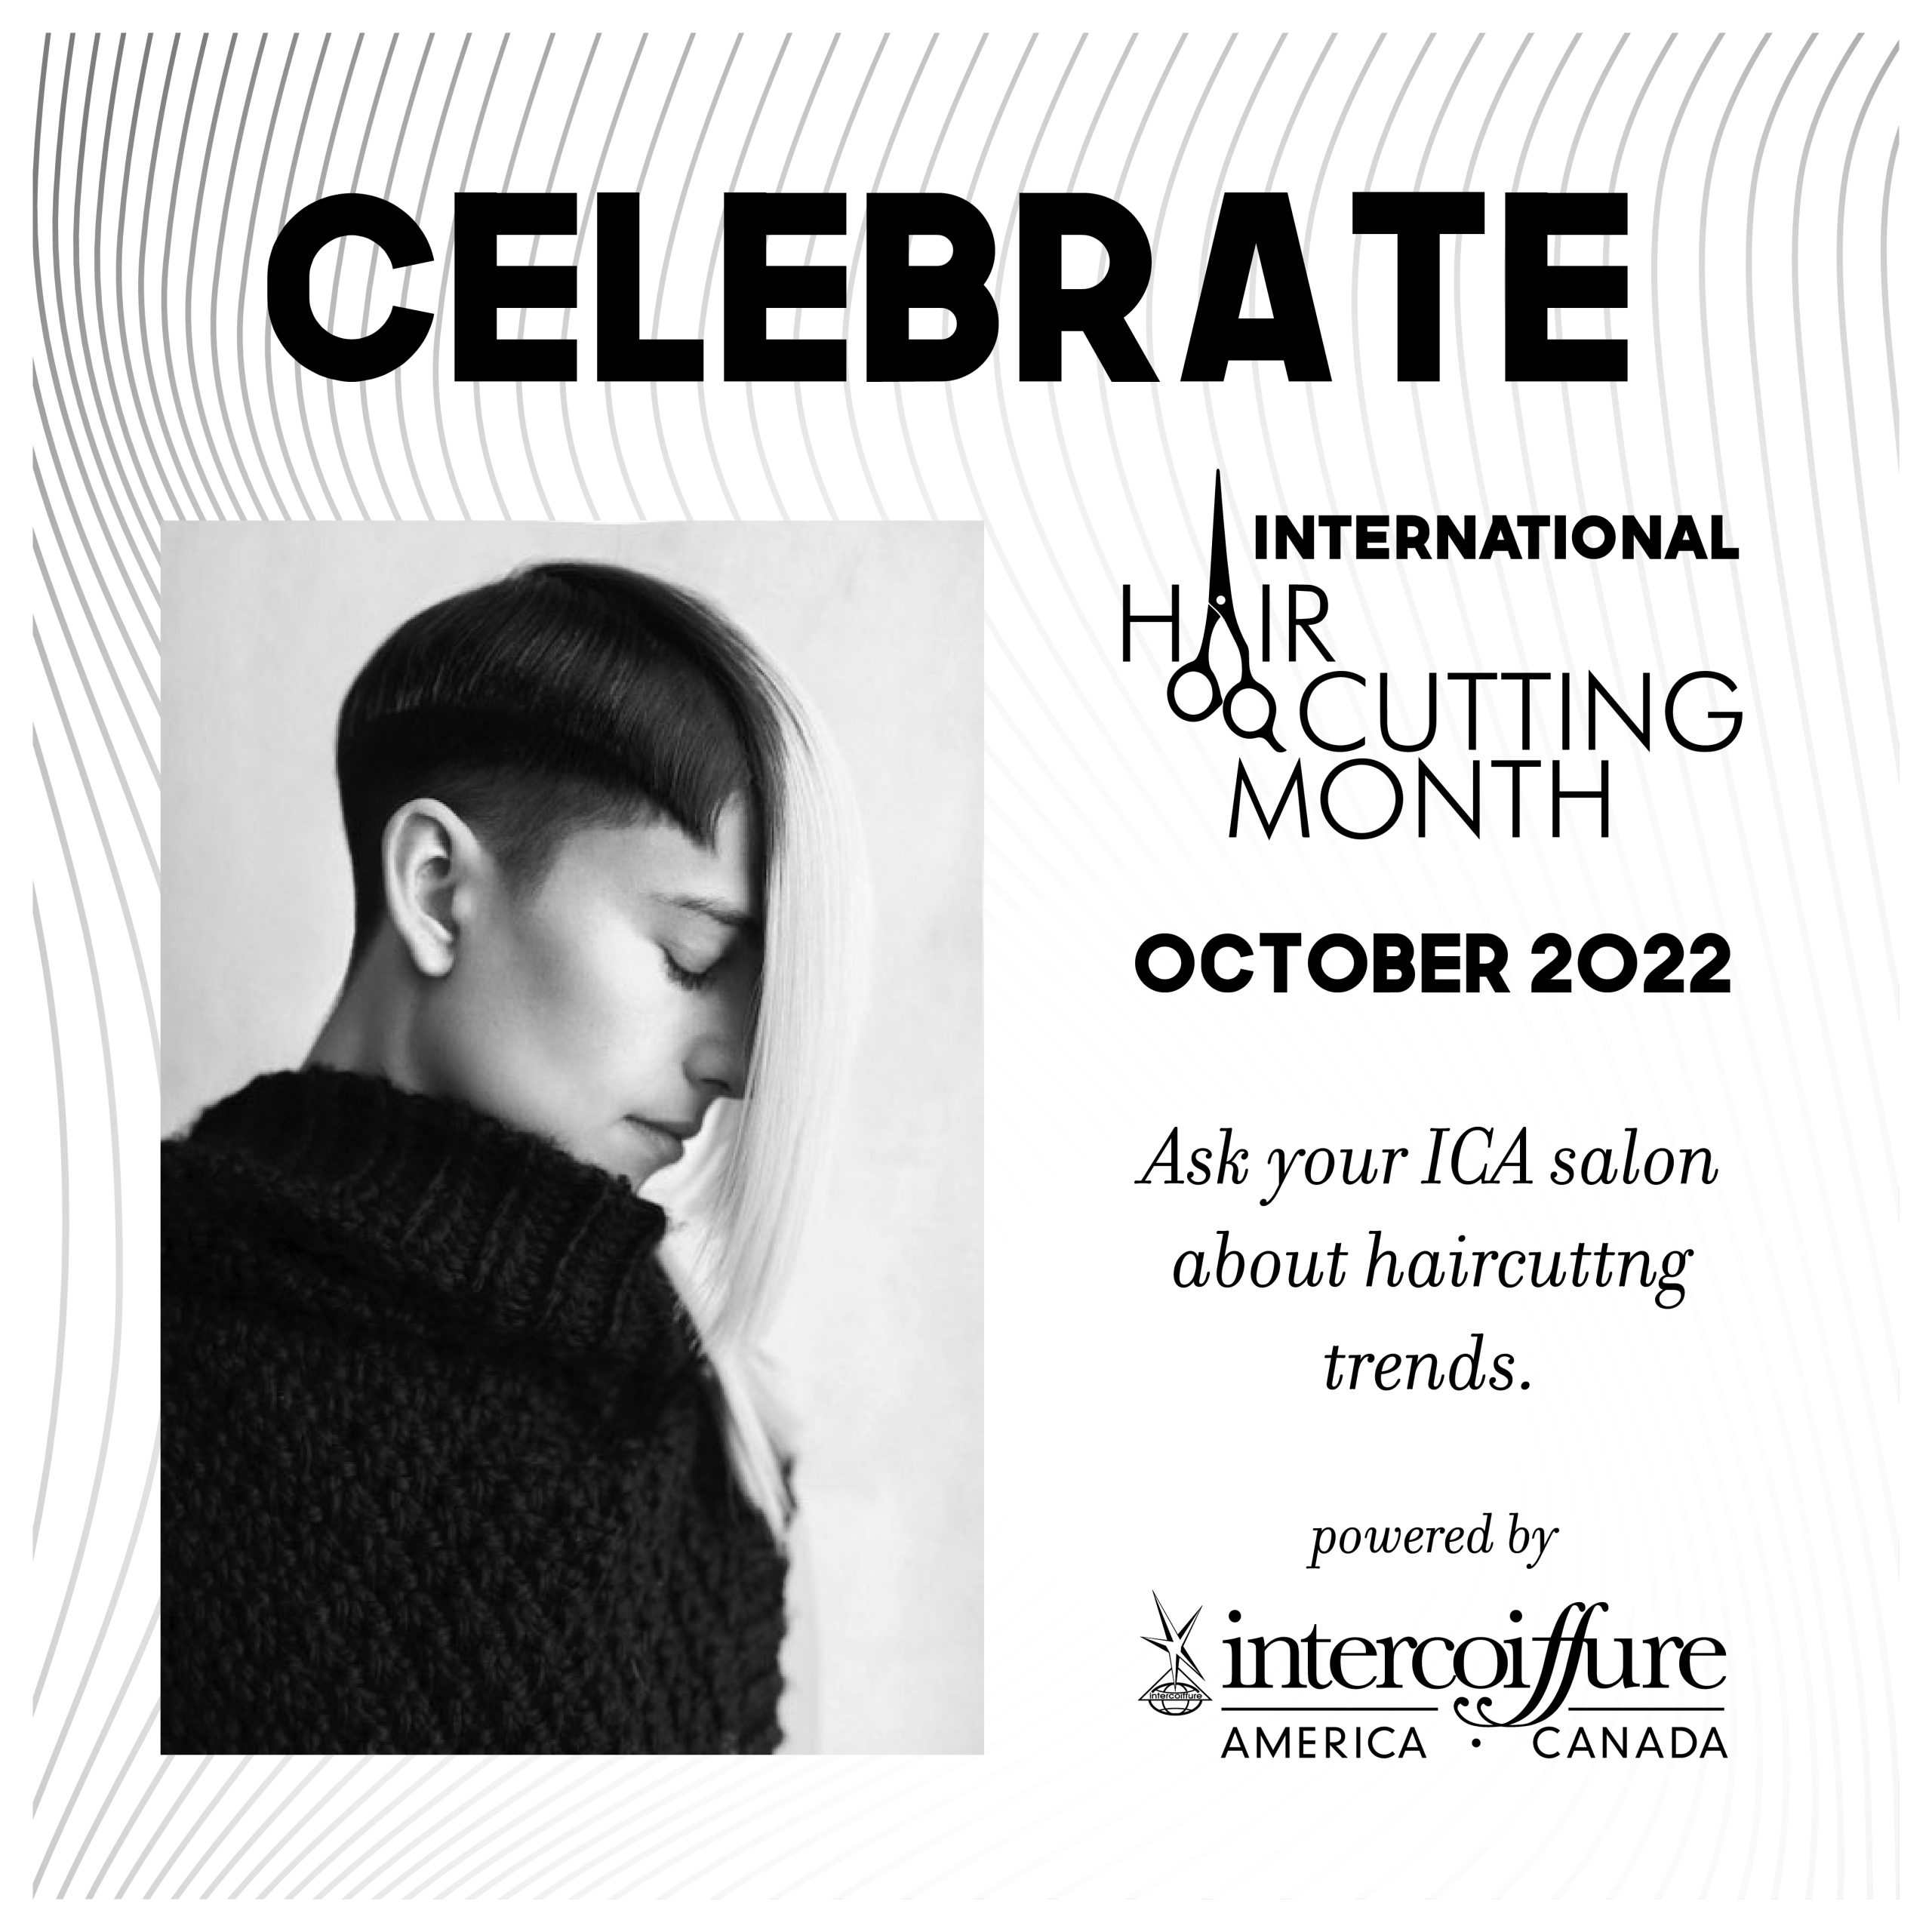 ICA International Haircutting Month